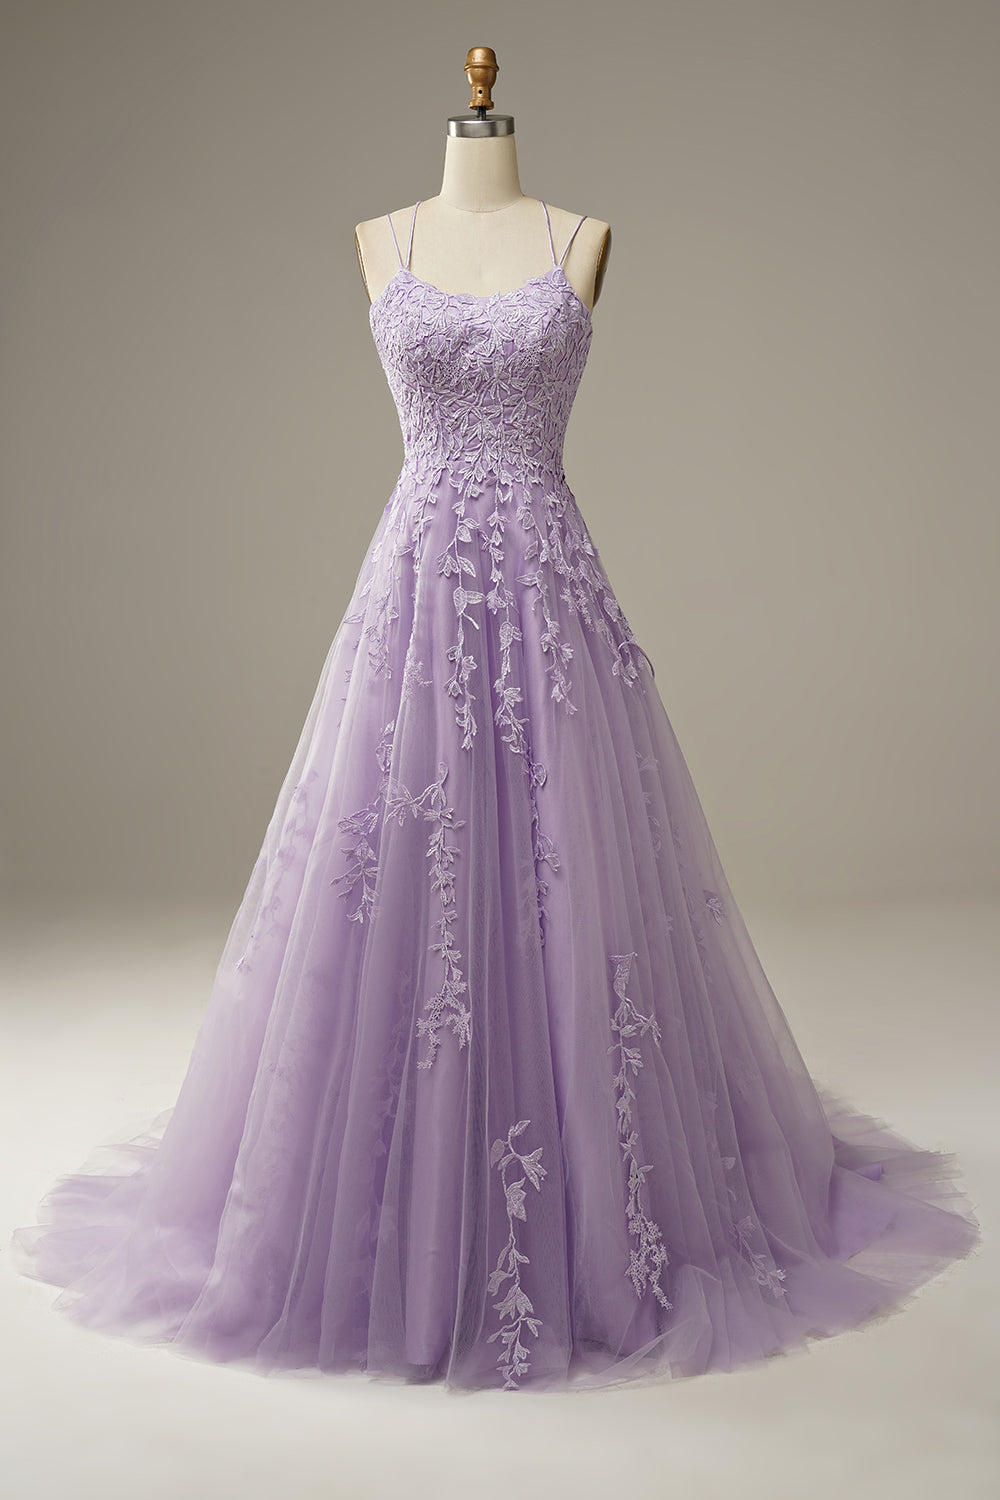 dress purple dresses